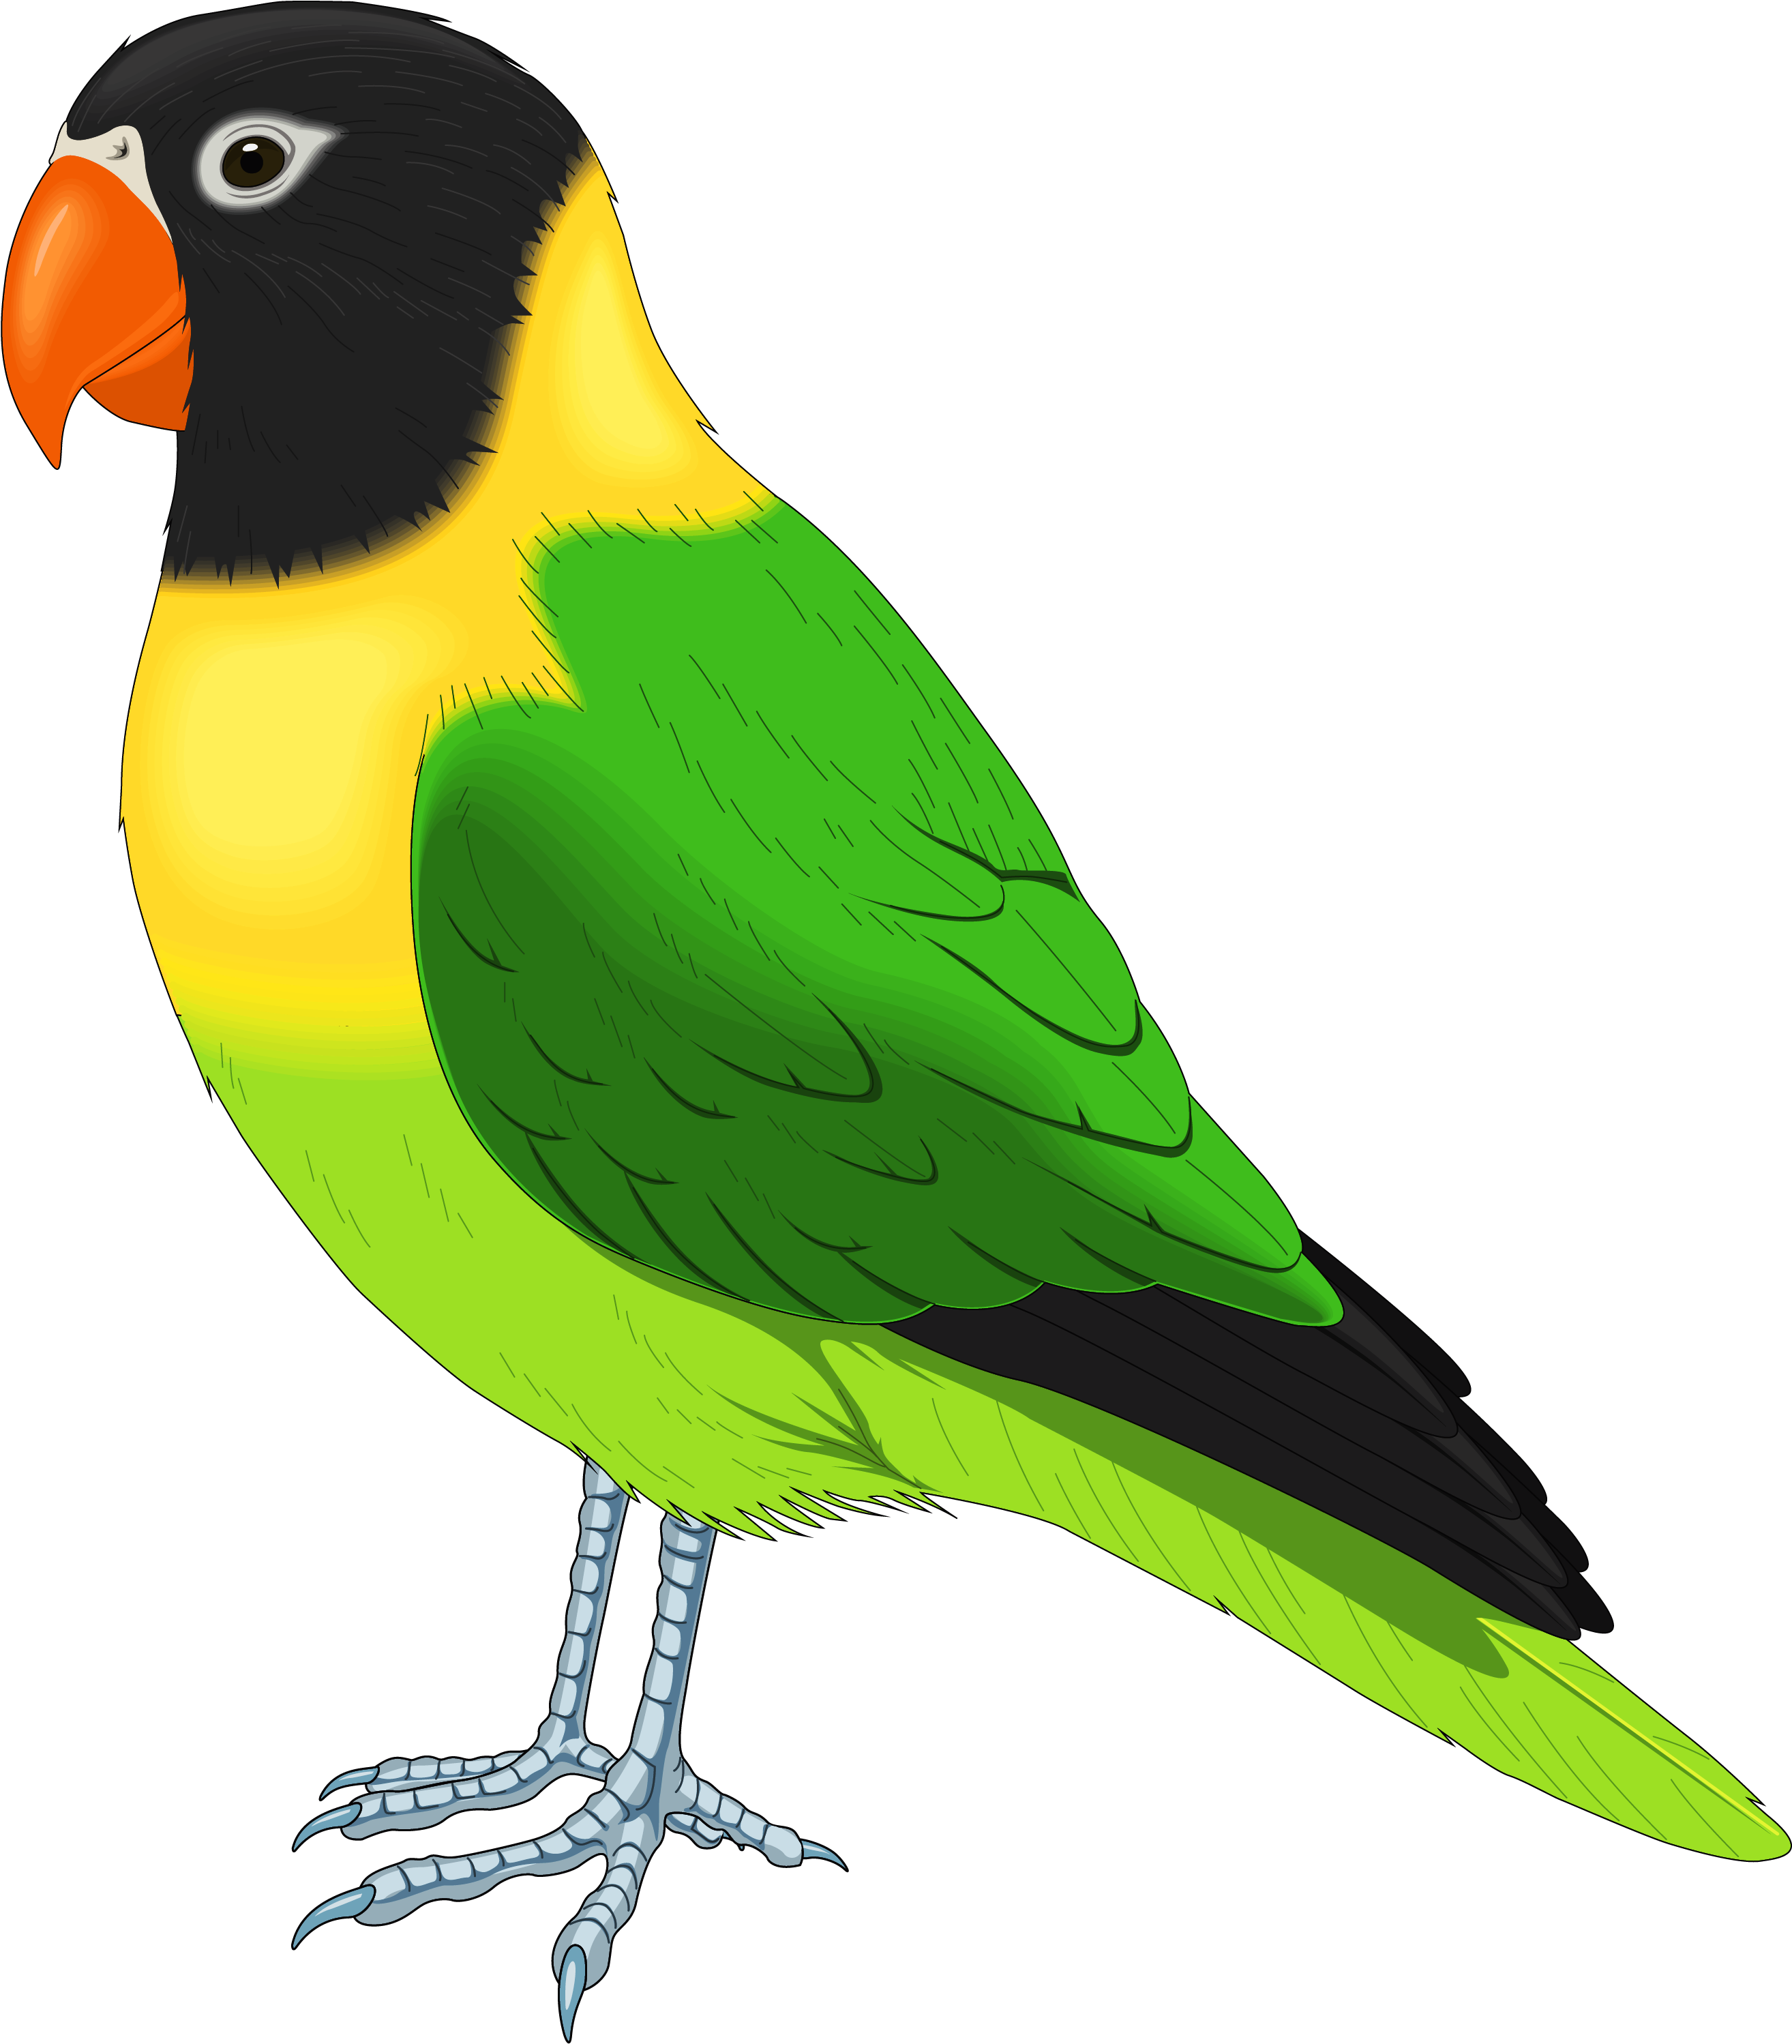 Colorful Parrot Illustration